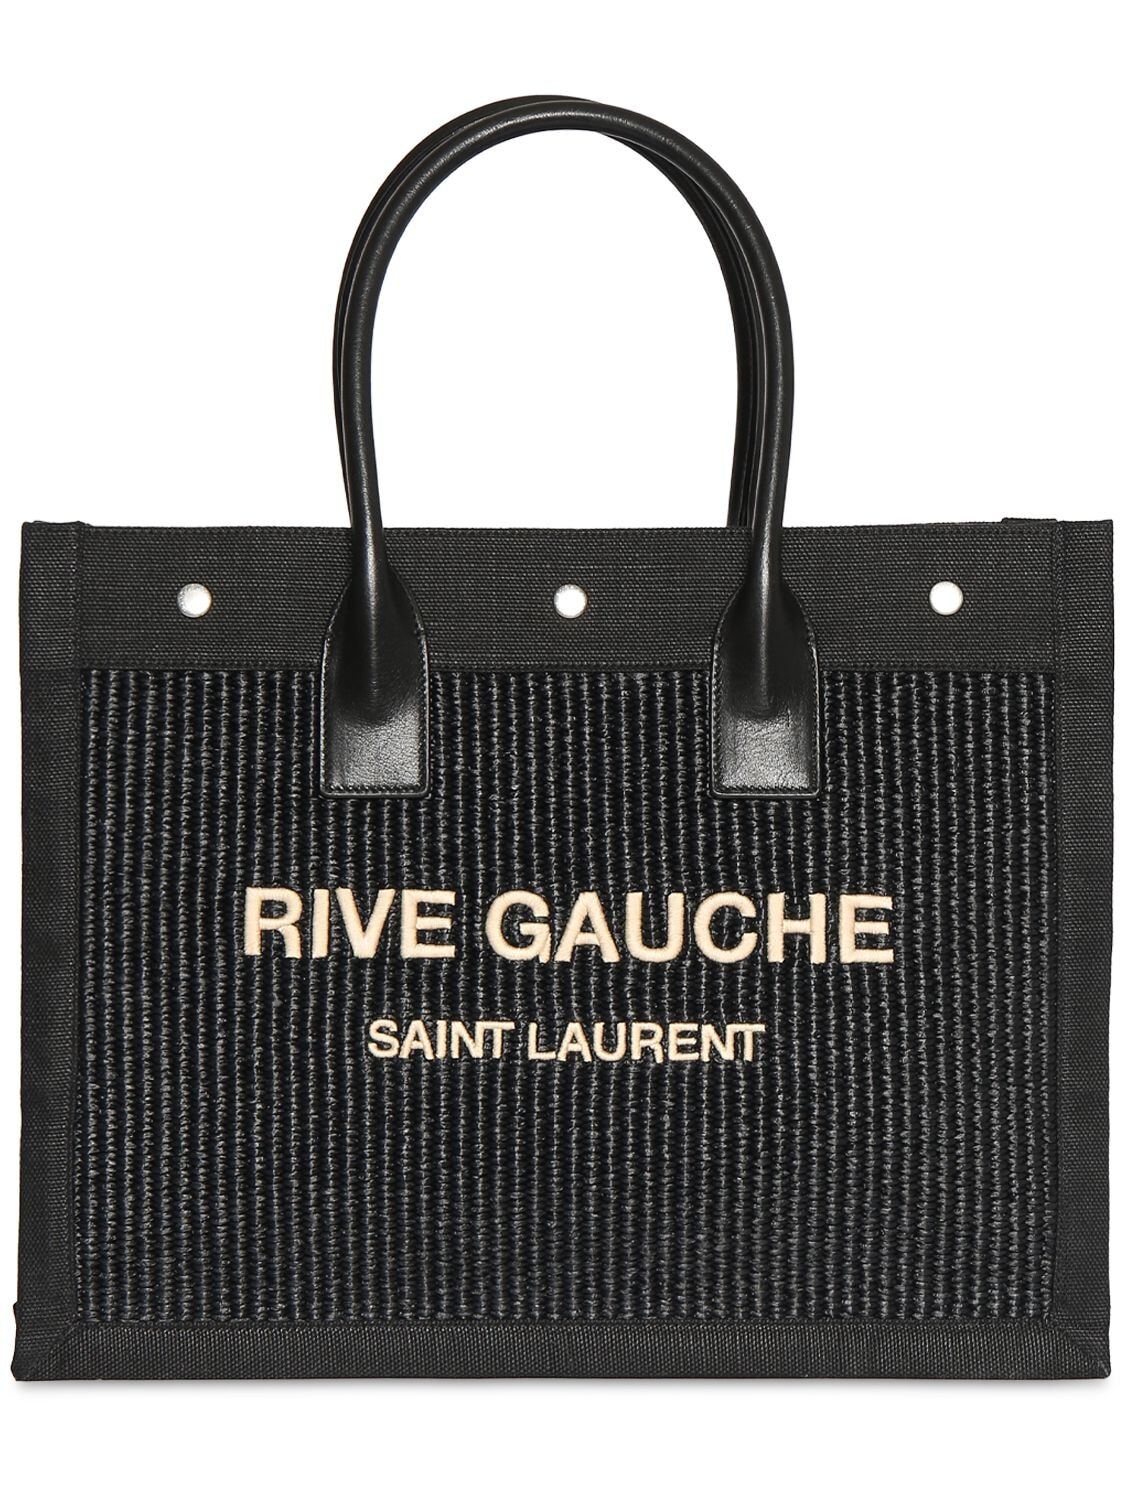 SAINT LAURENT Small Rive Gauche Canvas Tote Bag in black